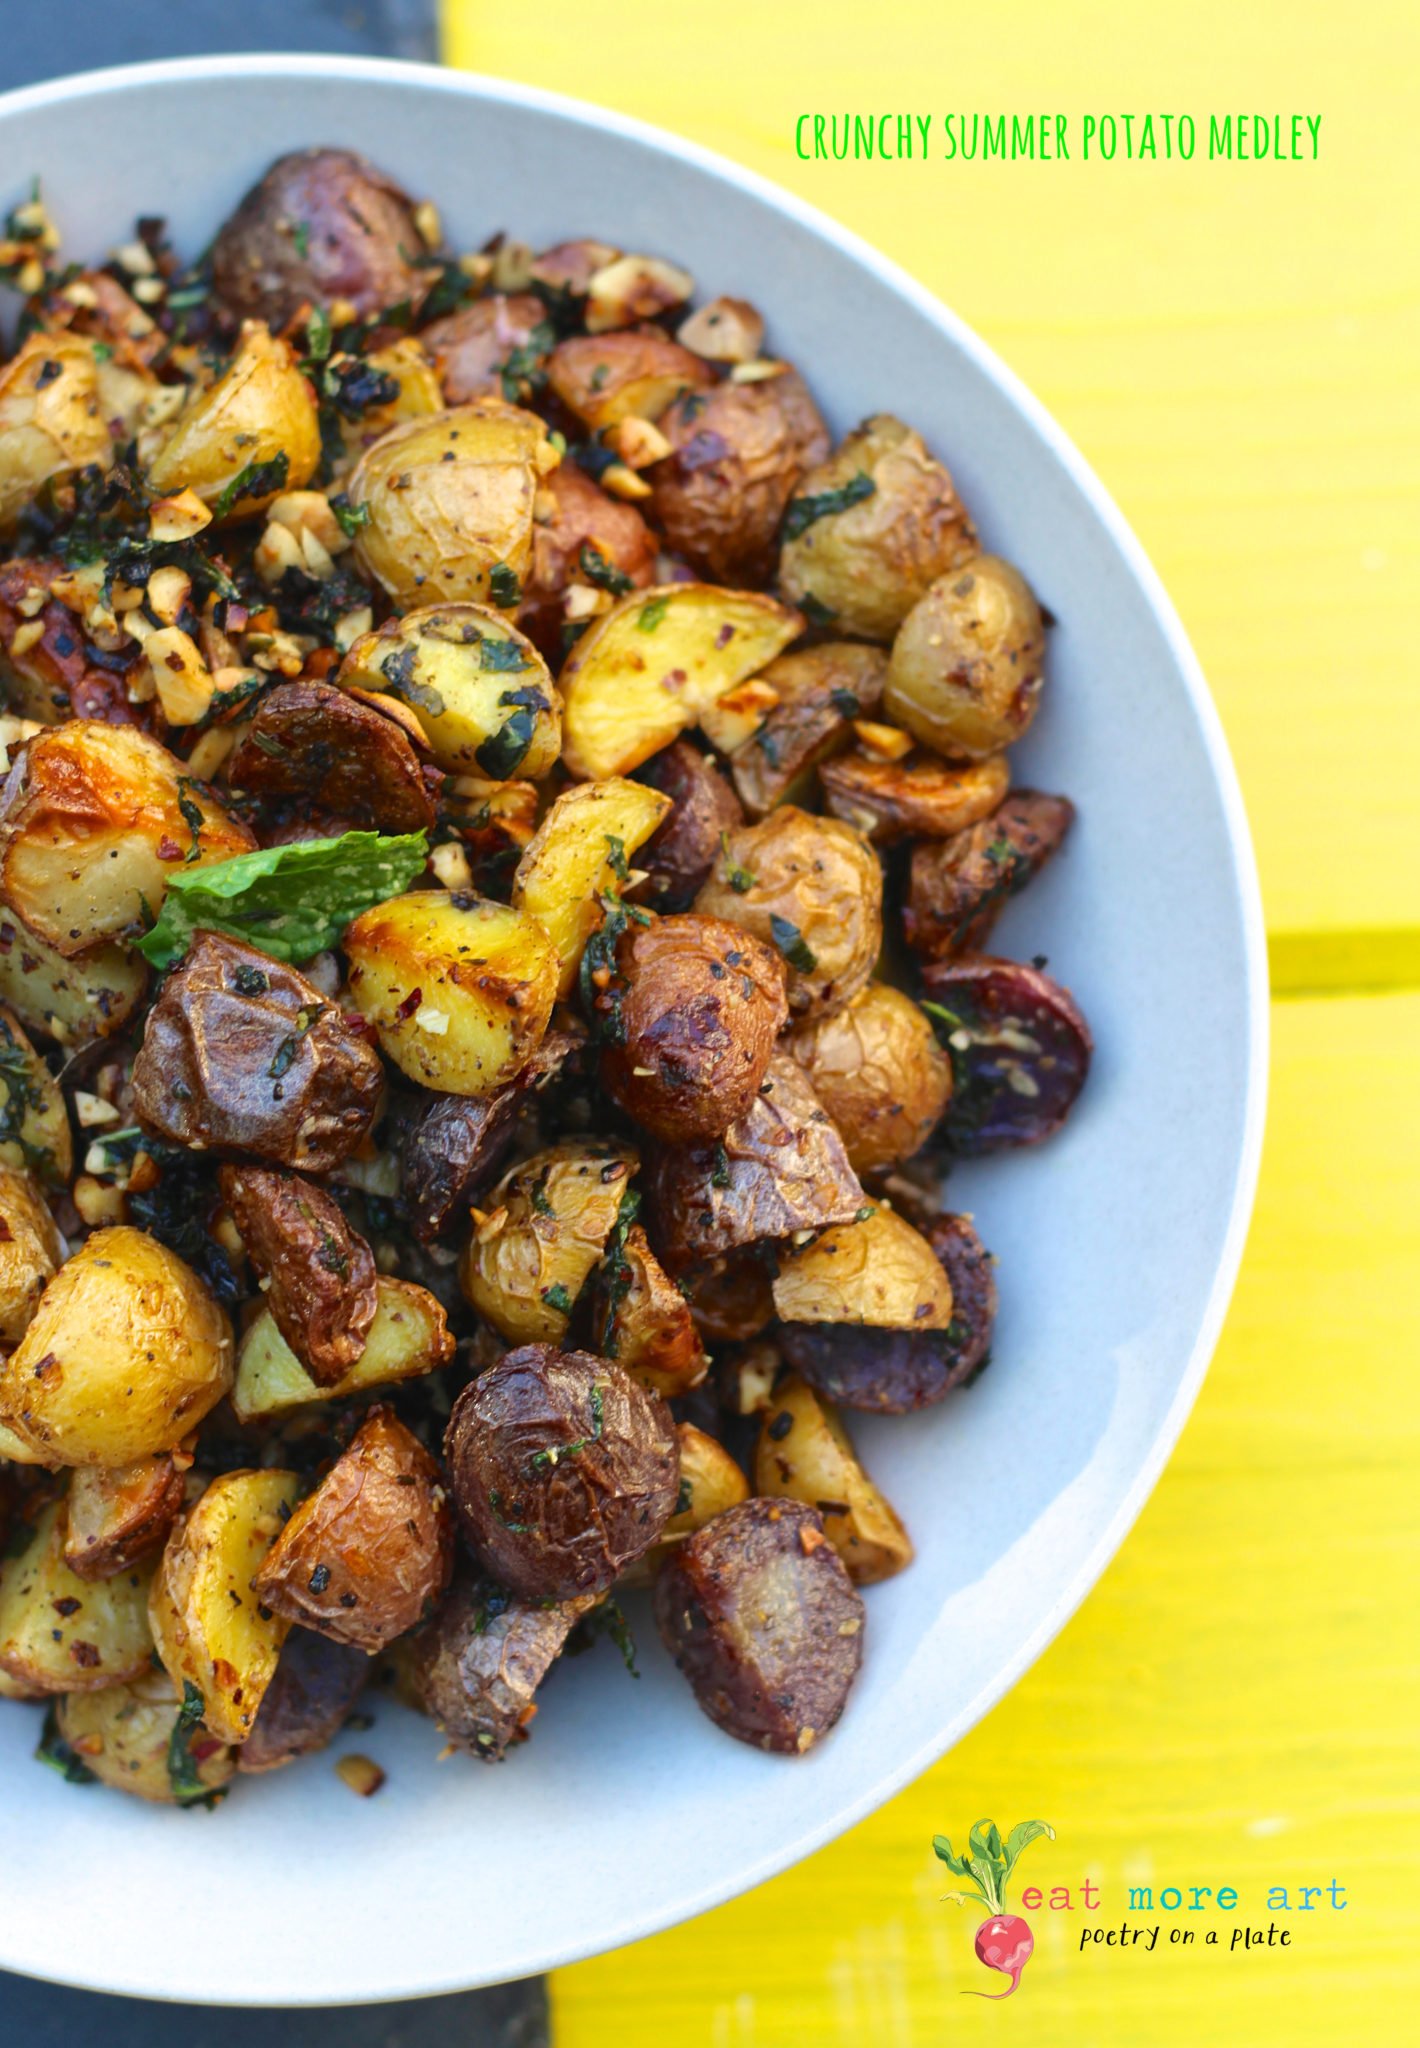 Crunchy Summer Potato Medley | Roasted Potatoes with Hazelnuts & Herbs | Eat More Art